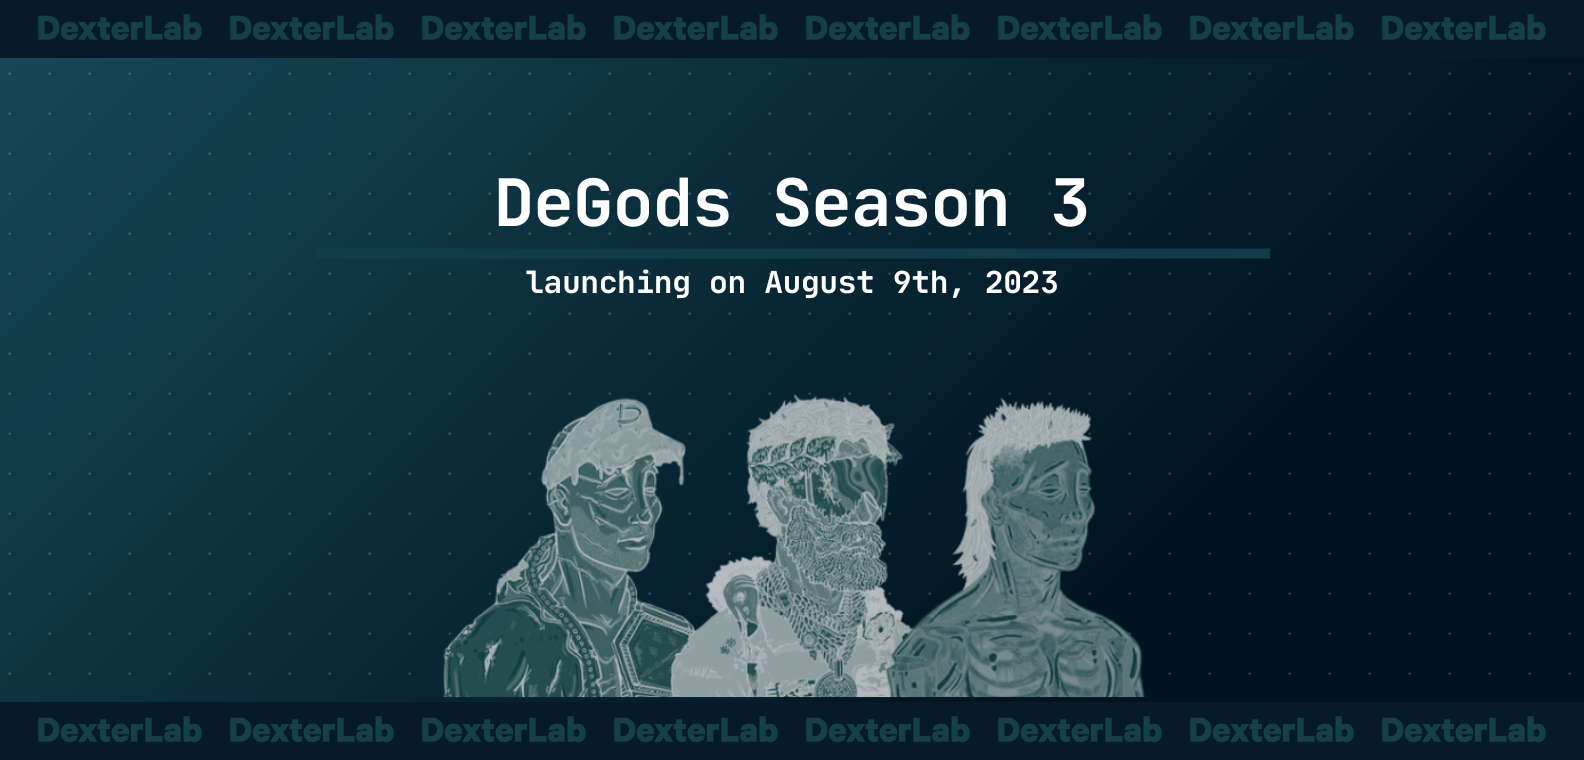 DeGods Season 3